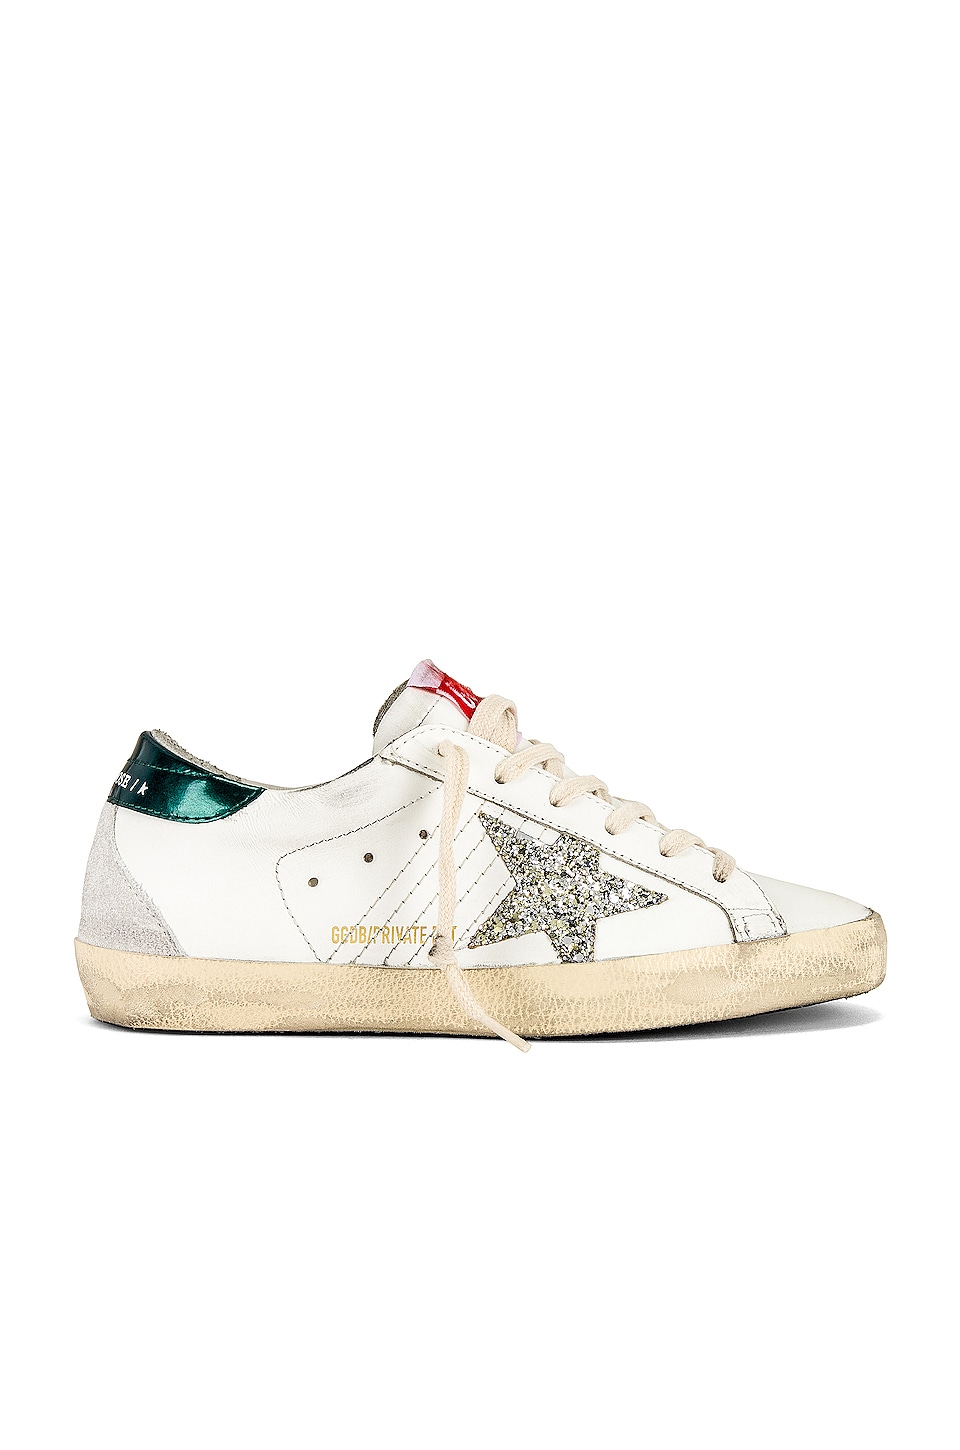 Image 1 of x REVOLVE Superstar Sneaker in White, Platinum, & Emerald Green